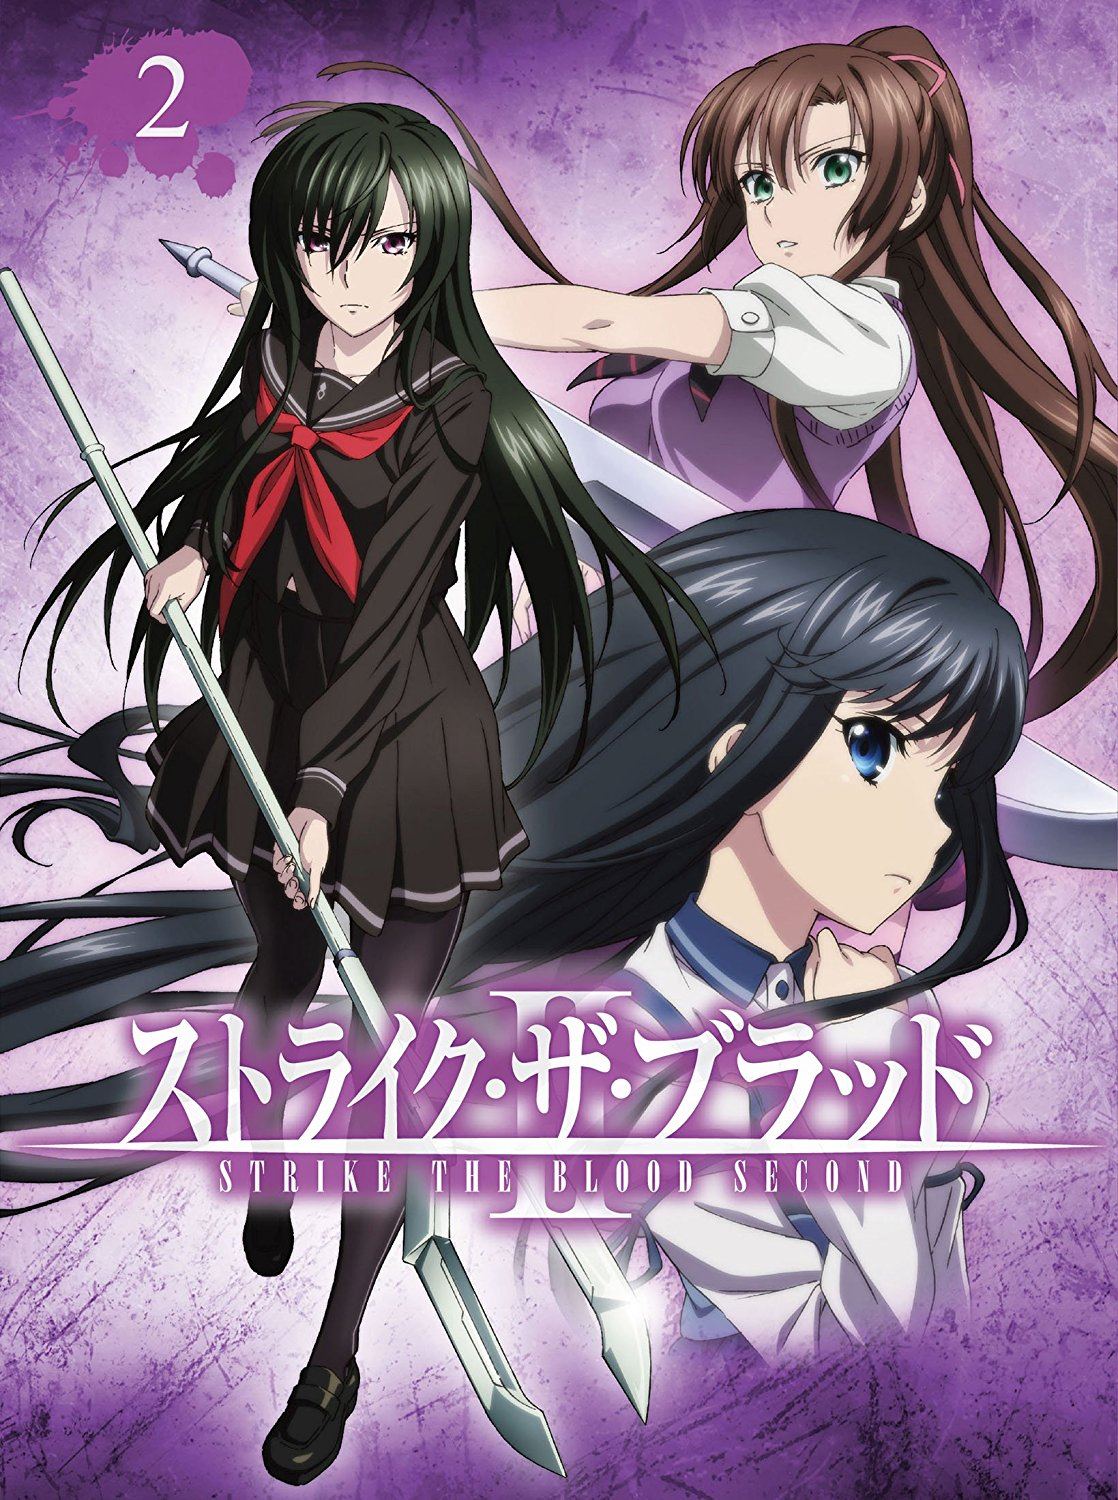 New Strike the Blood FINAL OVA Vol.1 Limited Edition Blu-ray